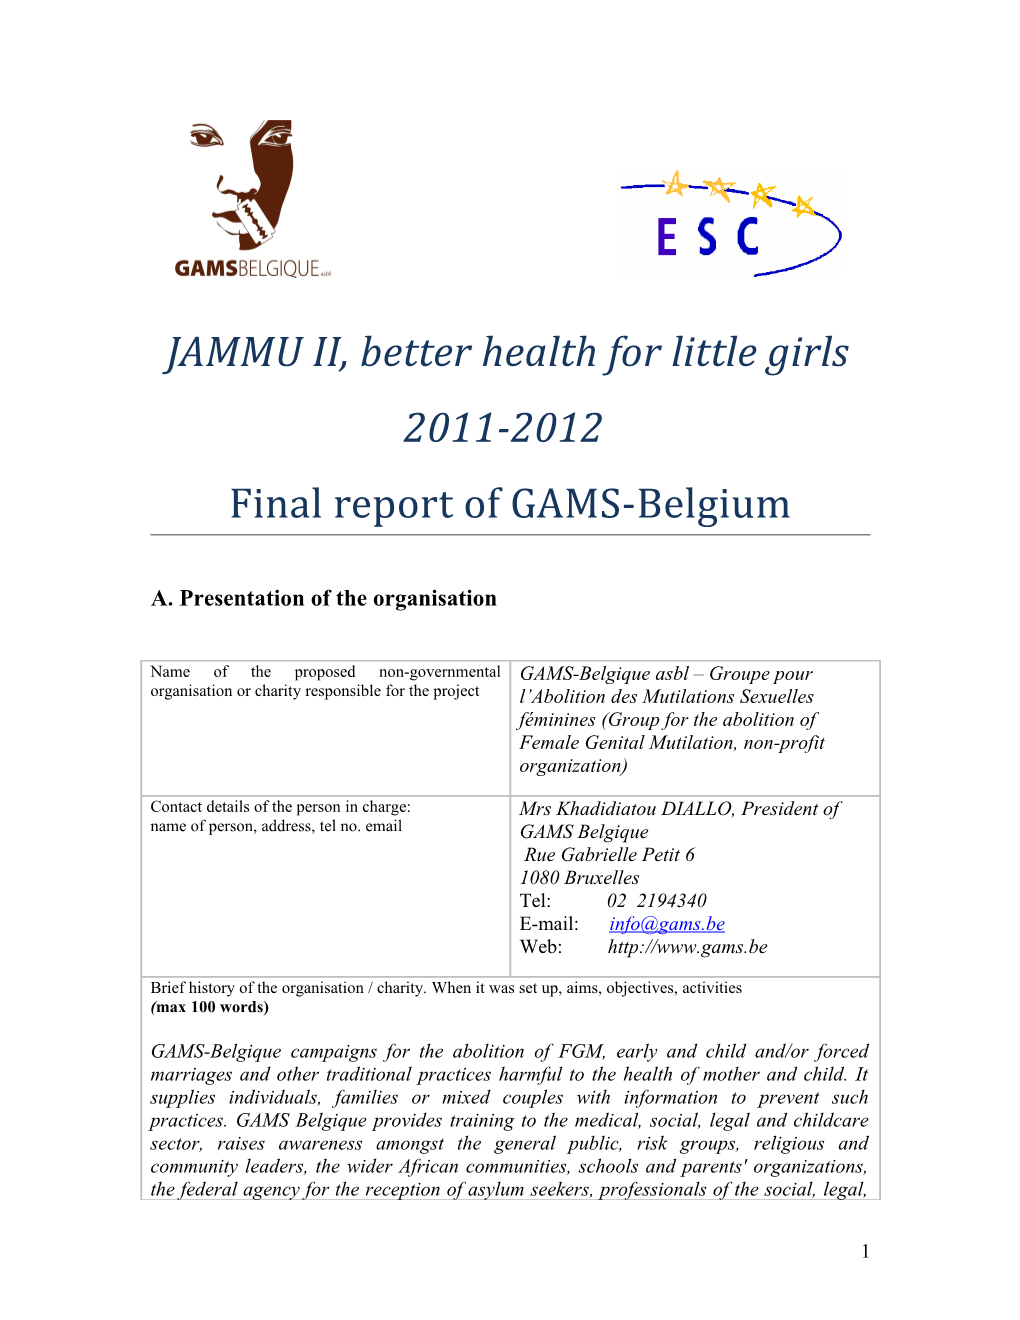 JAMMU II, Better Health for Little Girls